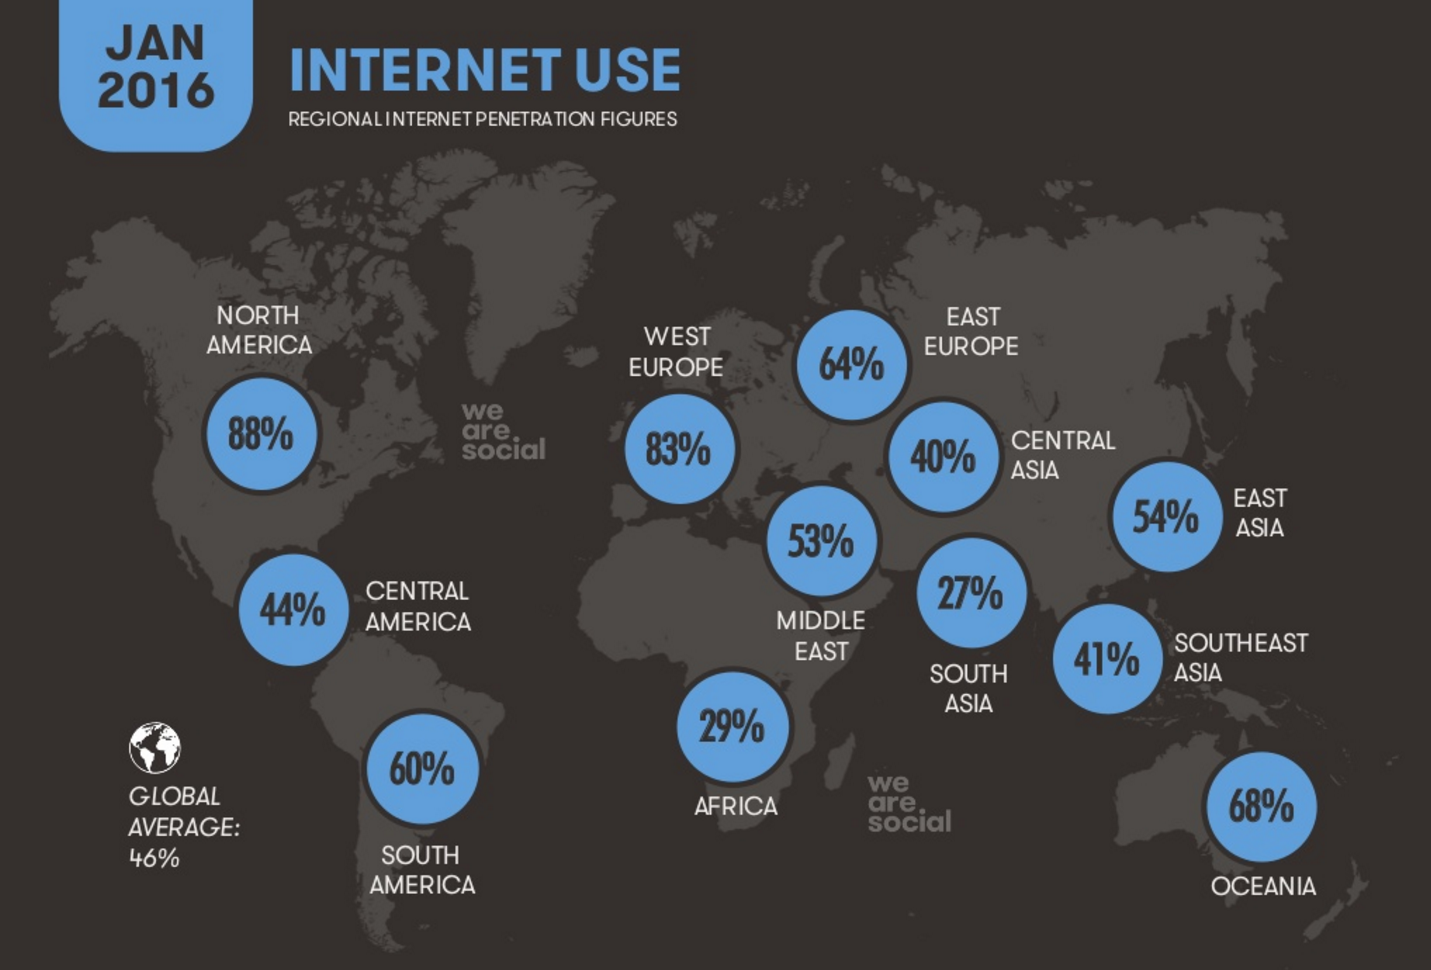 85% of Australians are active internet users - Mediaweek